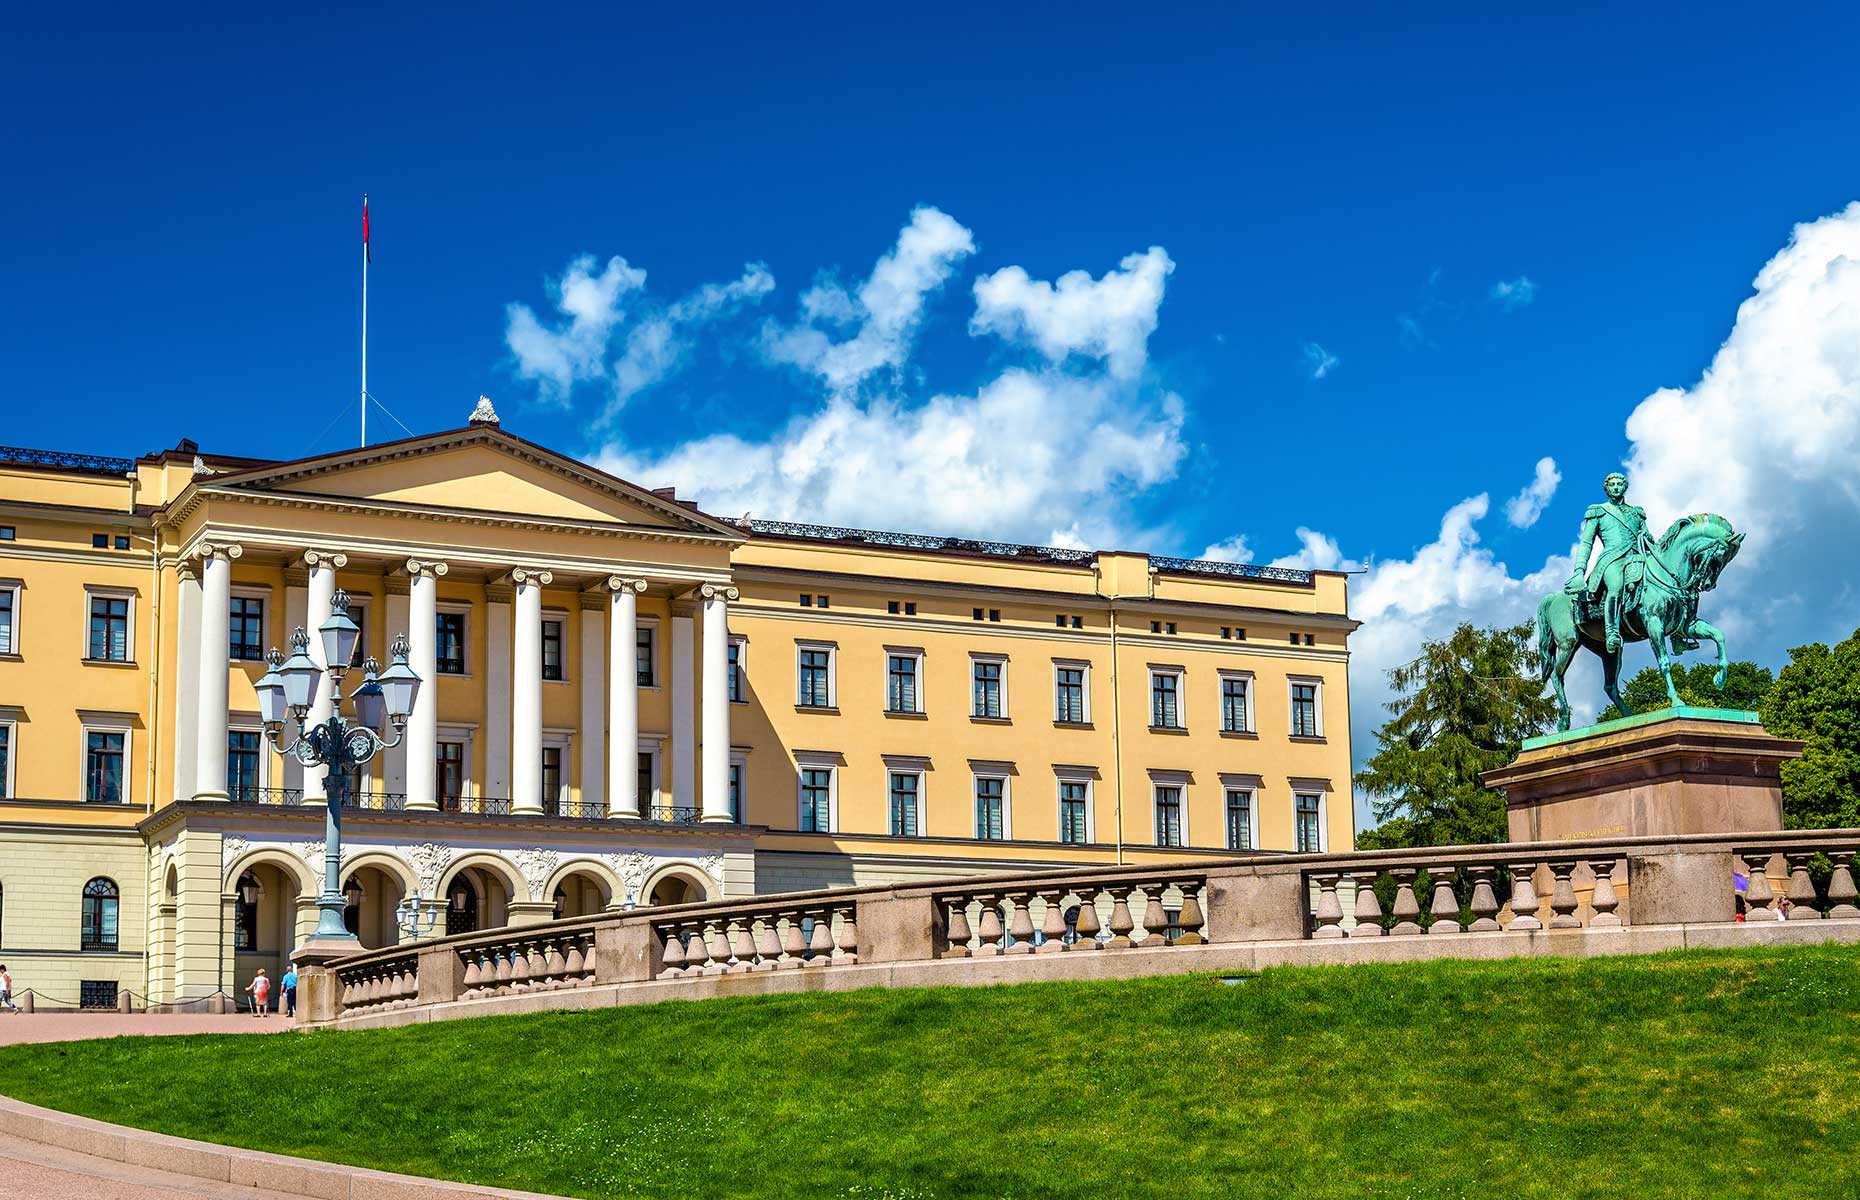 Royal Palace, Oslo (Image: Leonid Andronov/Shutterstock)